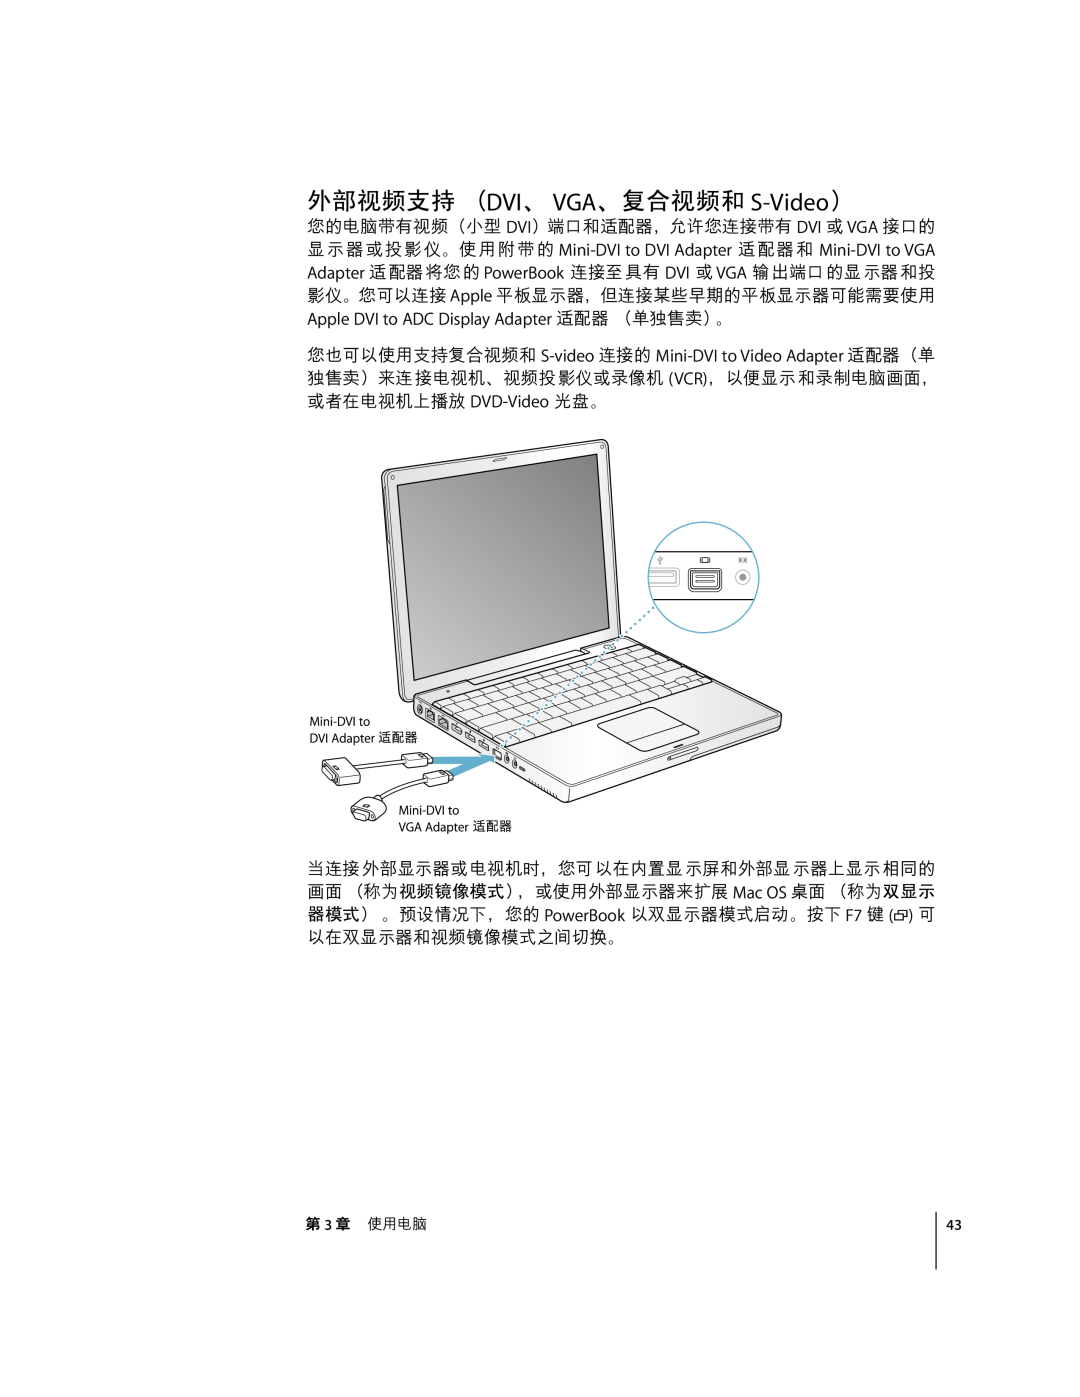 Apple G4 12 manual ¤¥£o §DVI VGA¨,¥£ S-Video 